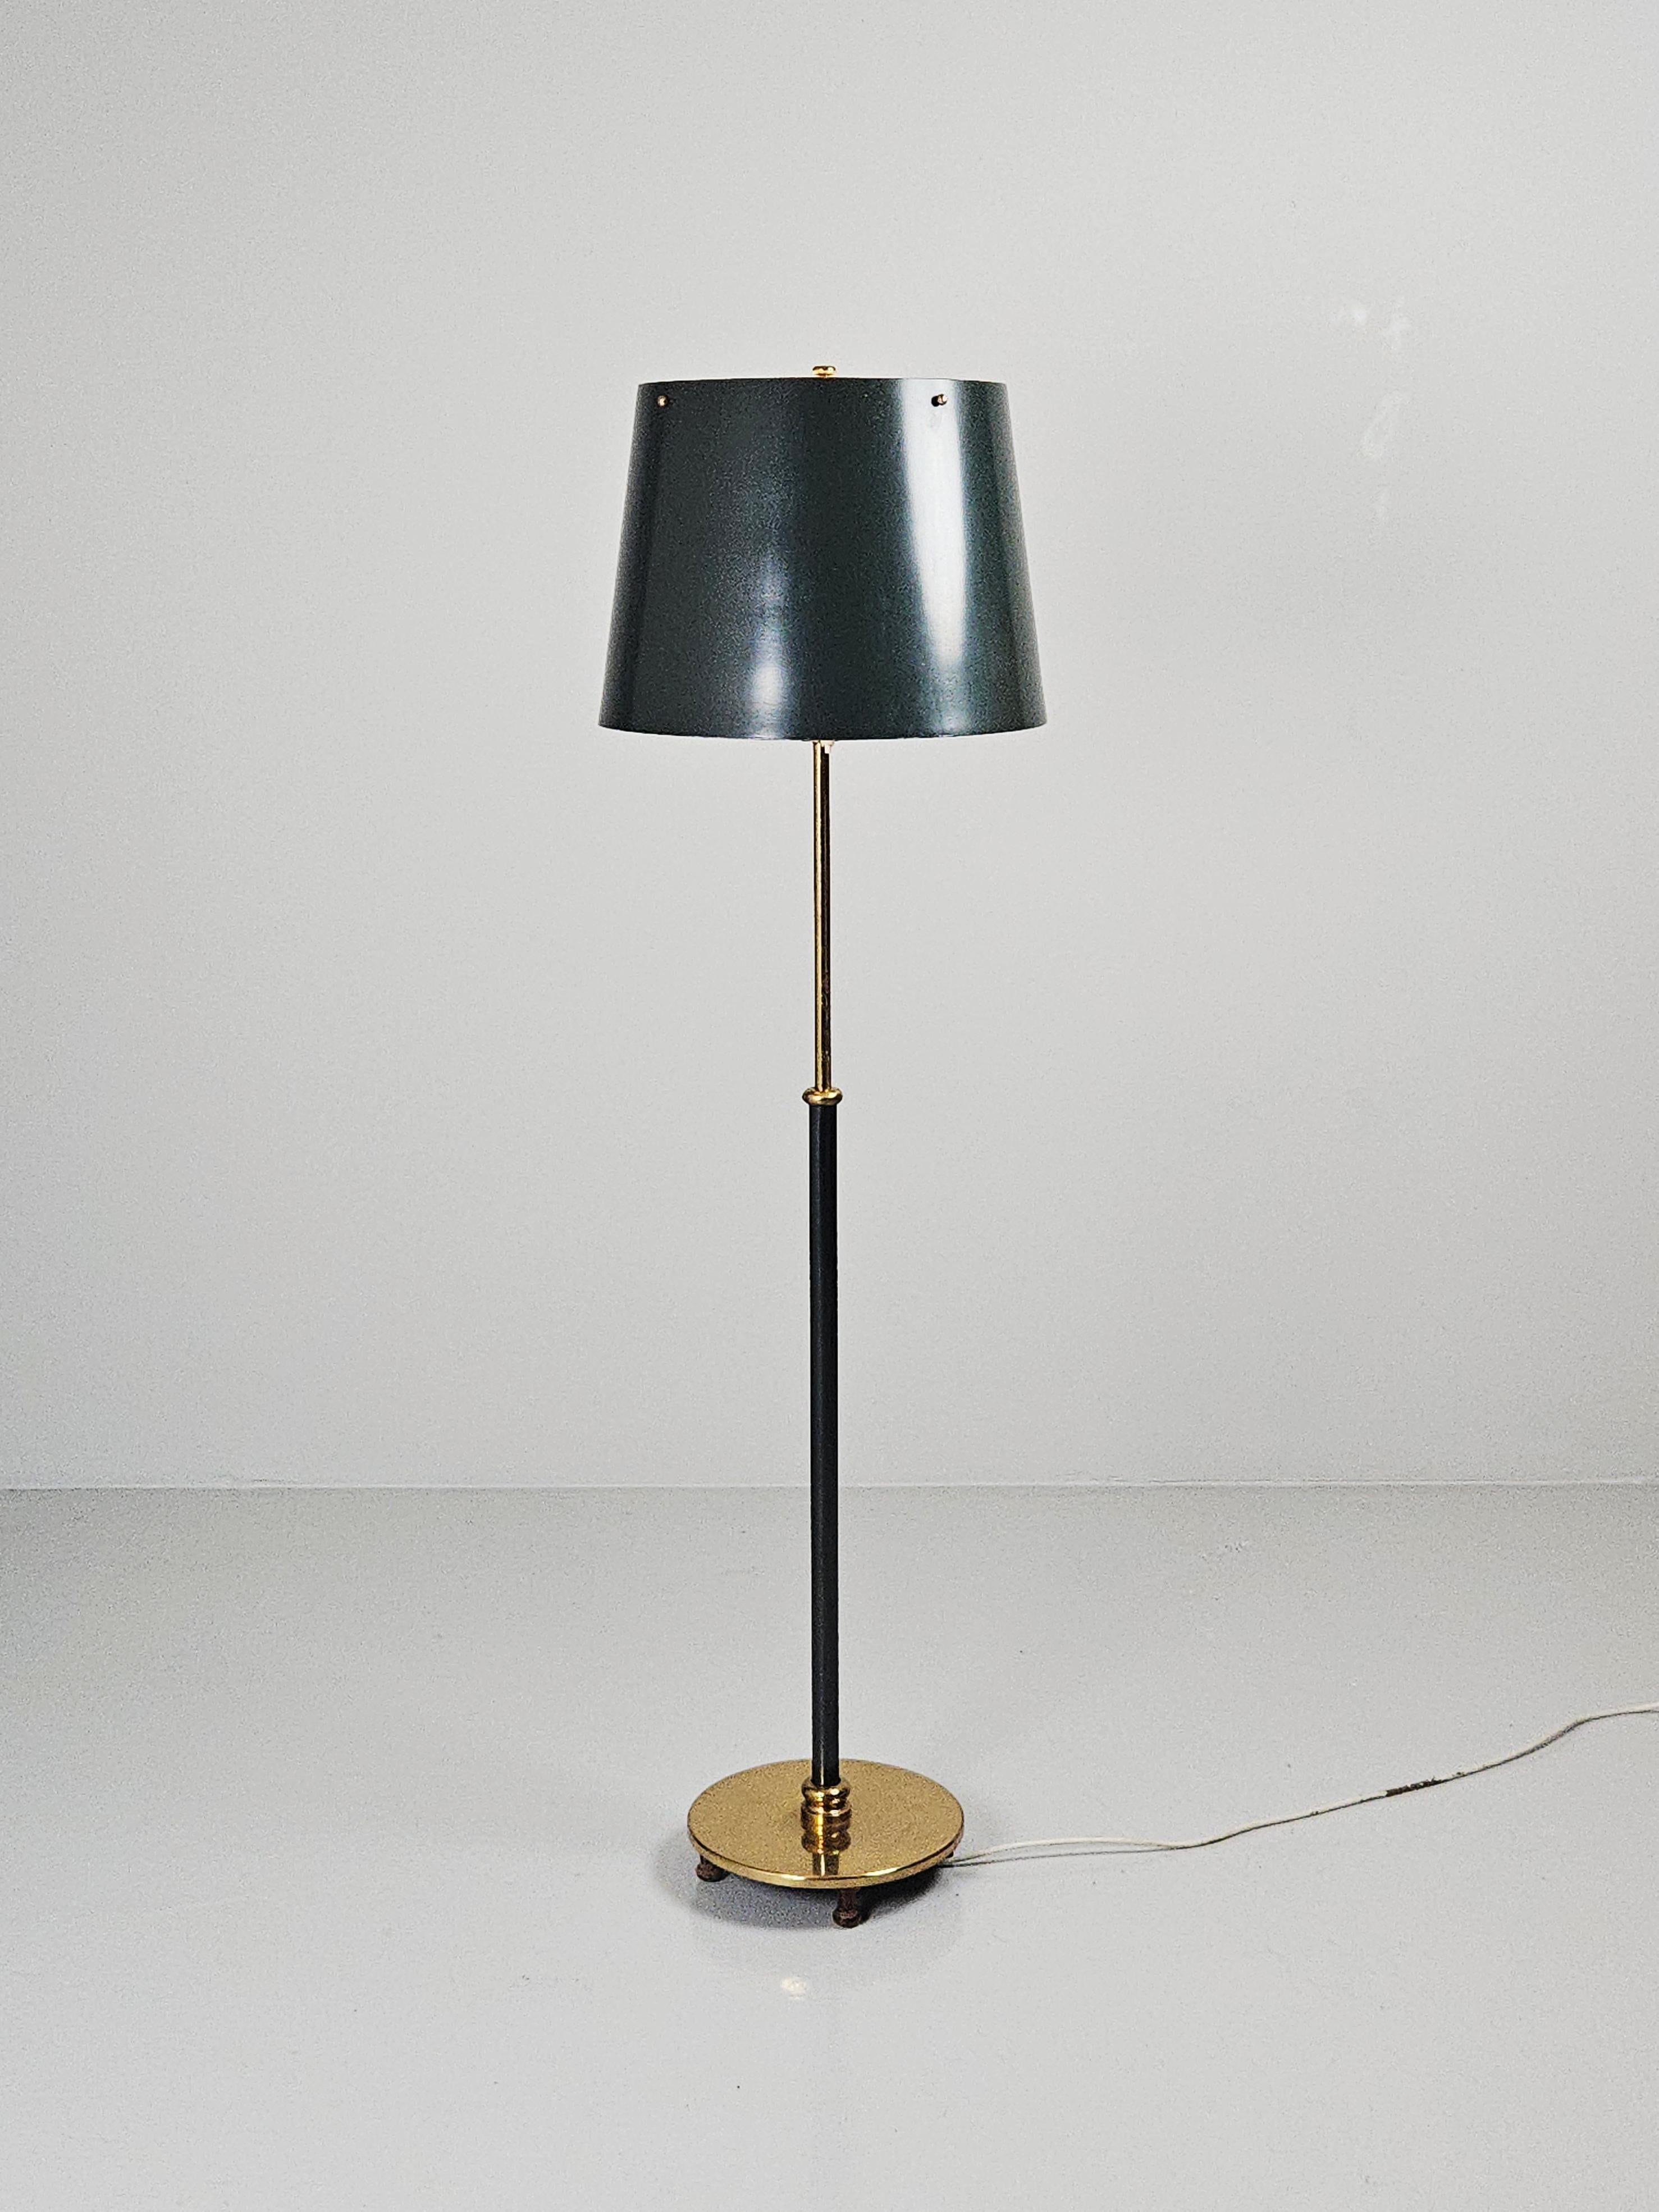 Floor lamp model 2564 designed by Josef Frank for Svenskt Tenn, Sweden, 1950s.

Black lacquered brass with green metal shade.

Stamped.